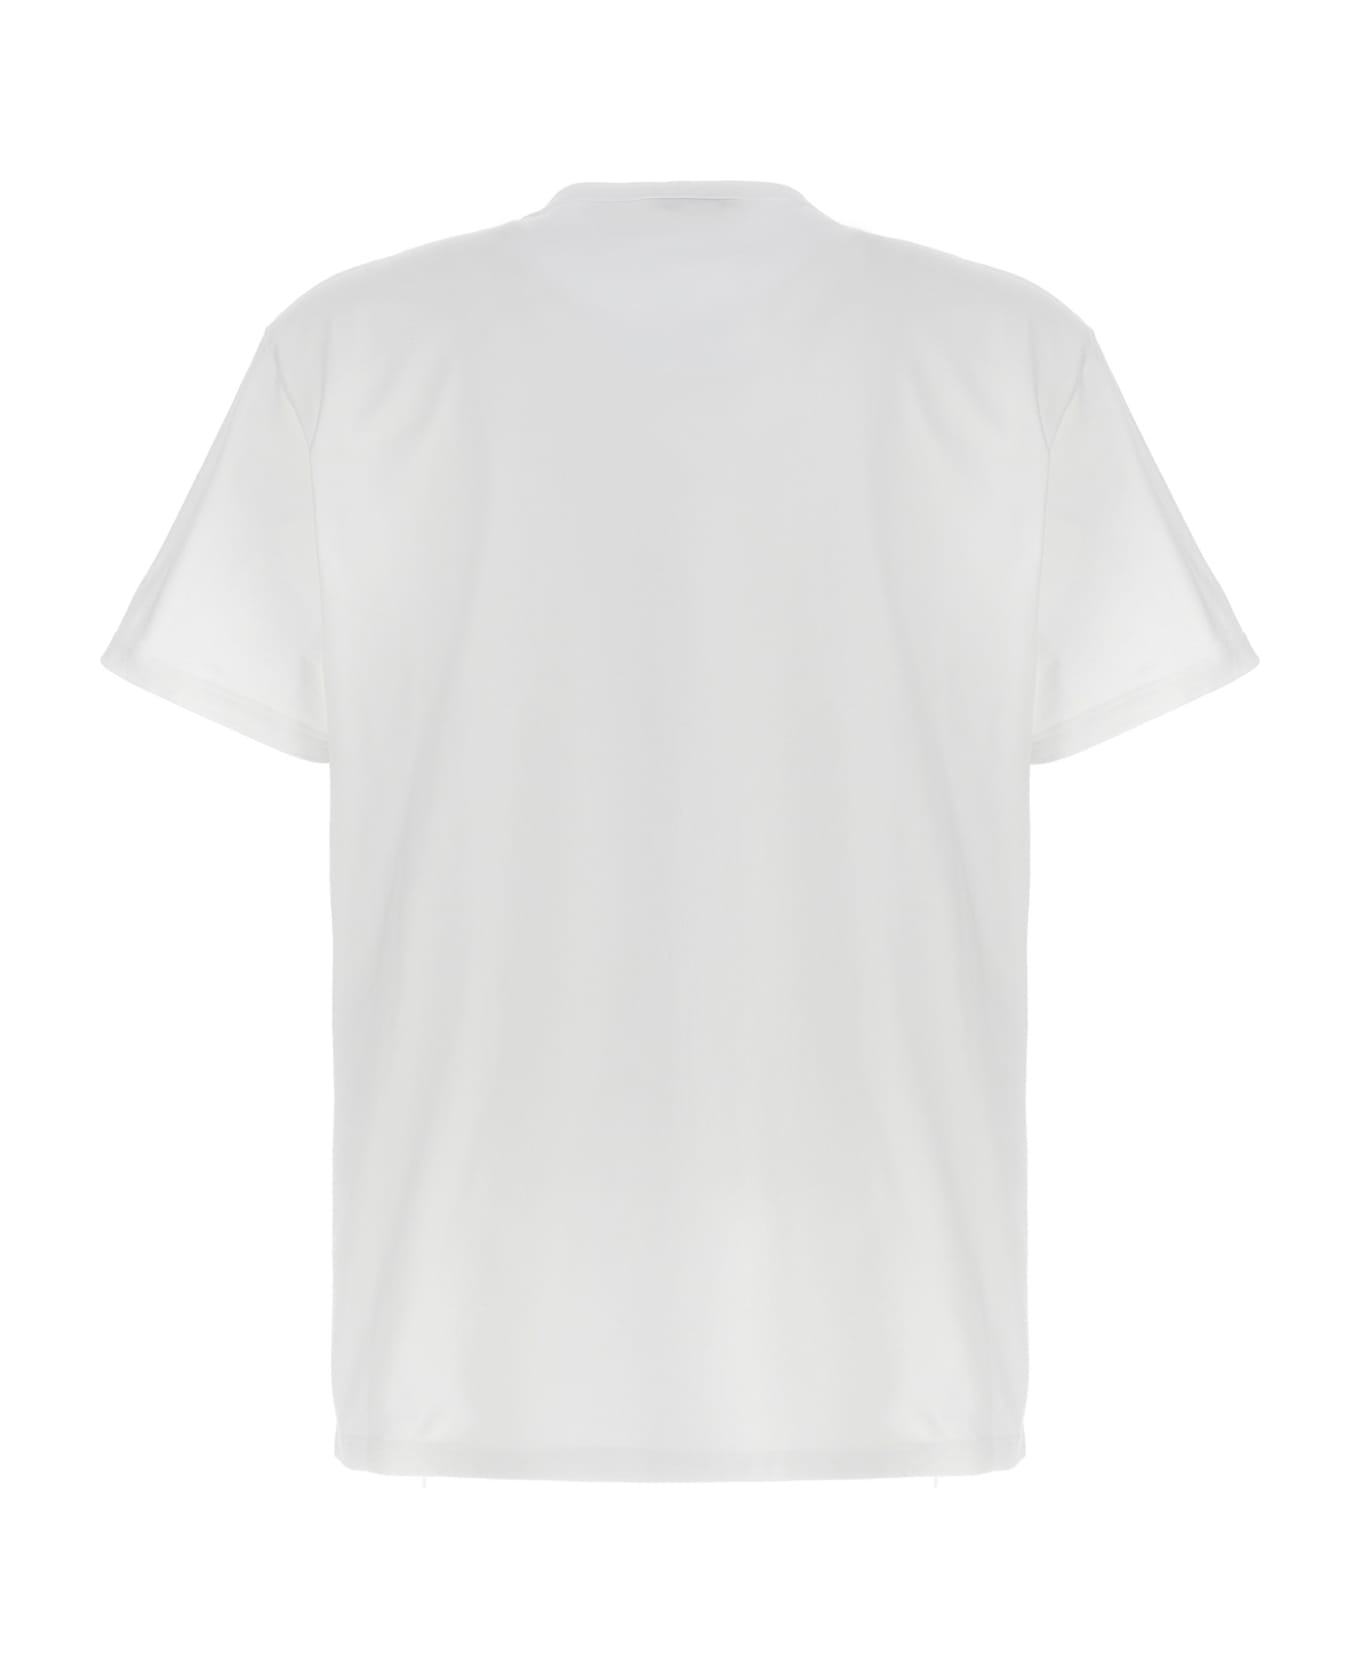 Alexander McQueen Skull Logo Print T-shirt - White Mix